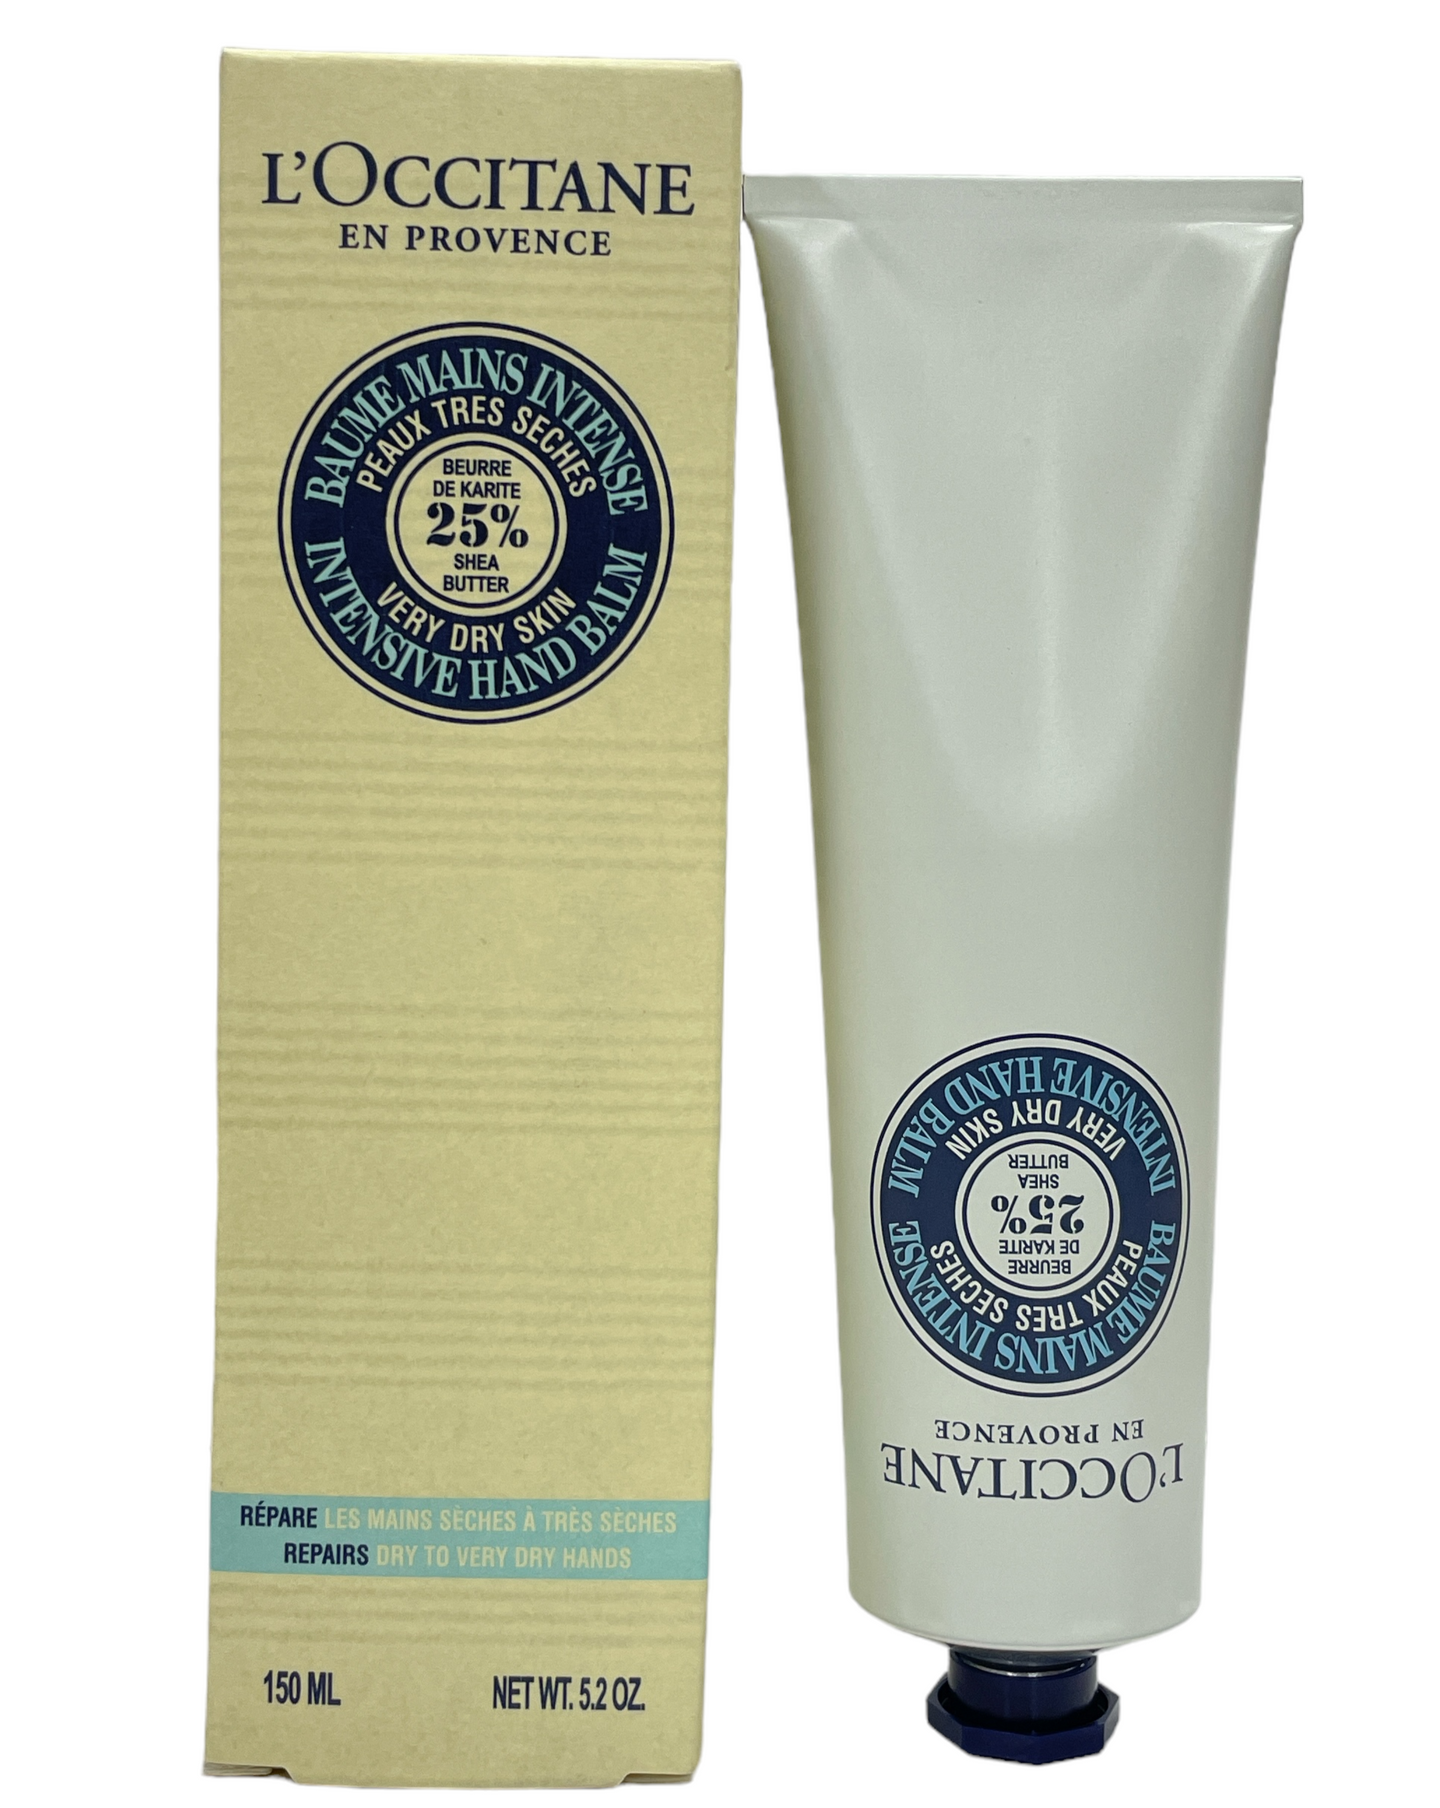 L'Occitane 25% Shea Butter Very Dry Skin Intensive Hand Balm (150ml / 5.2oz)